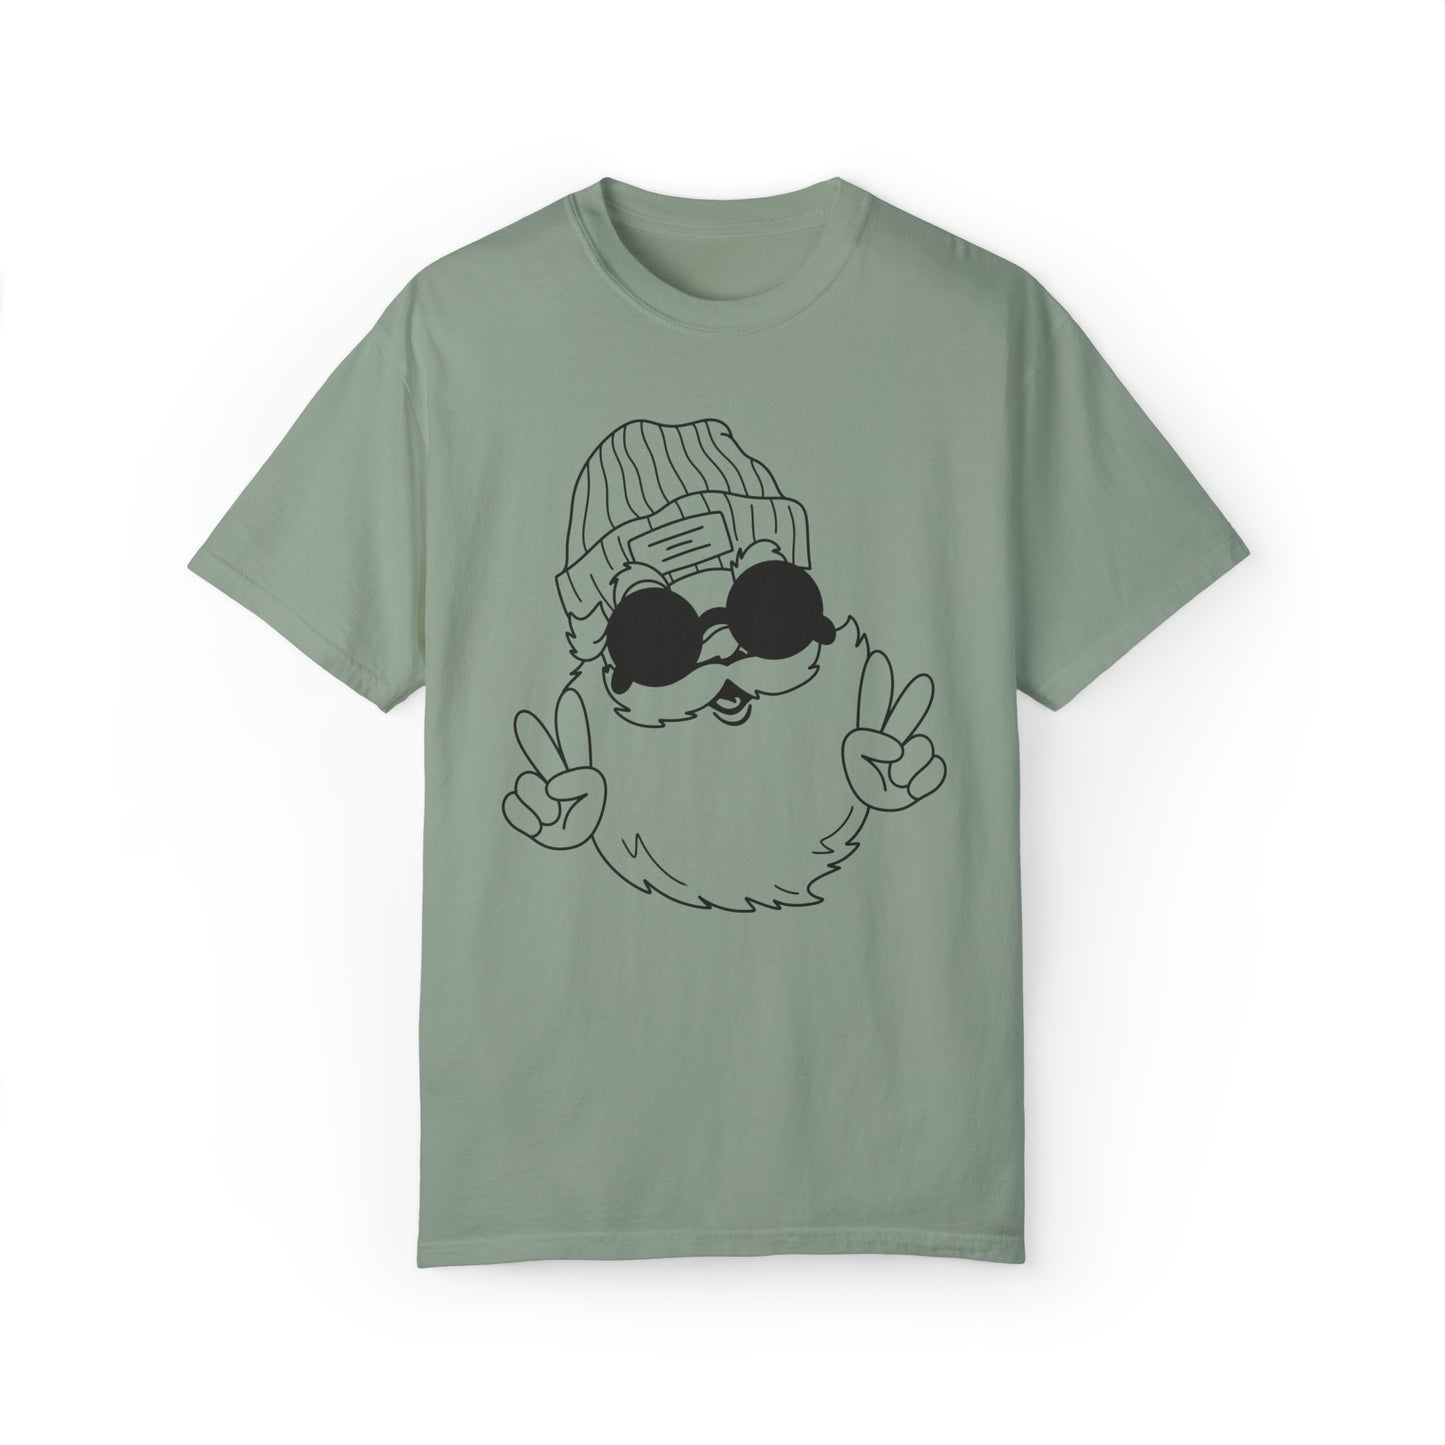 Santa Peace Shirt